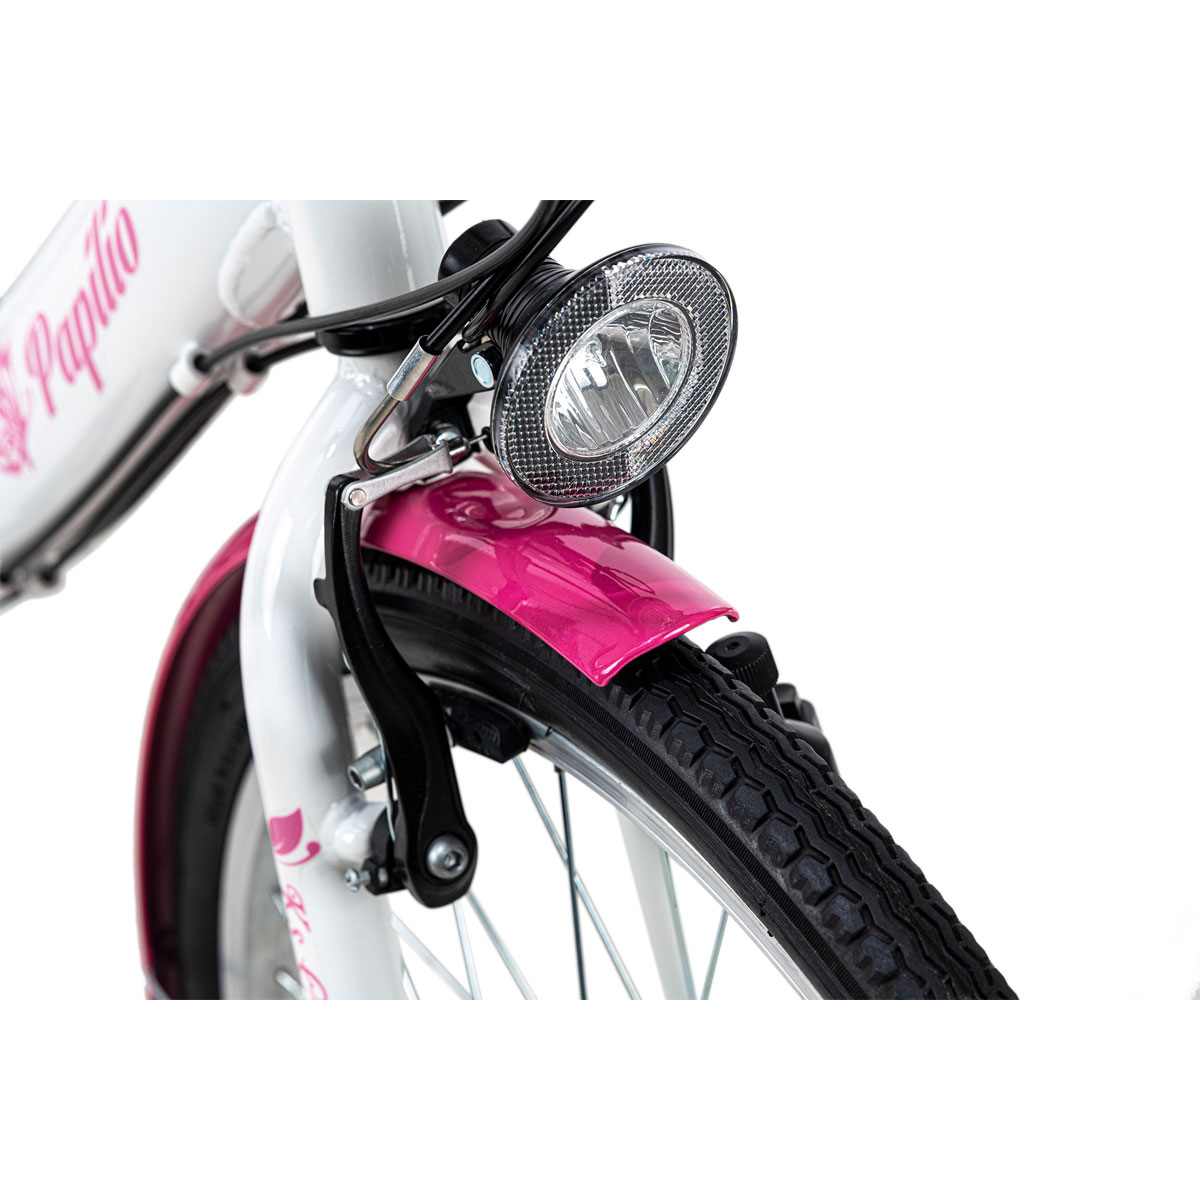 Jugend-Mountainbike „Papilio“, 24 Zoll, weiß-pink